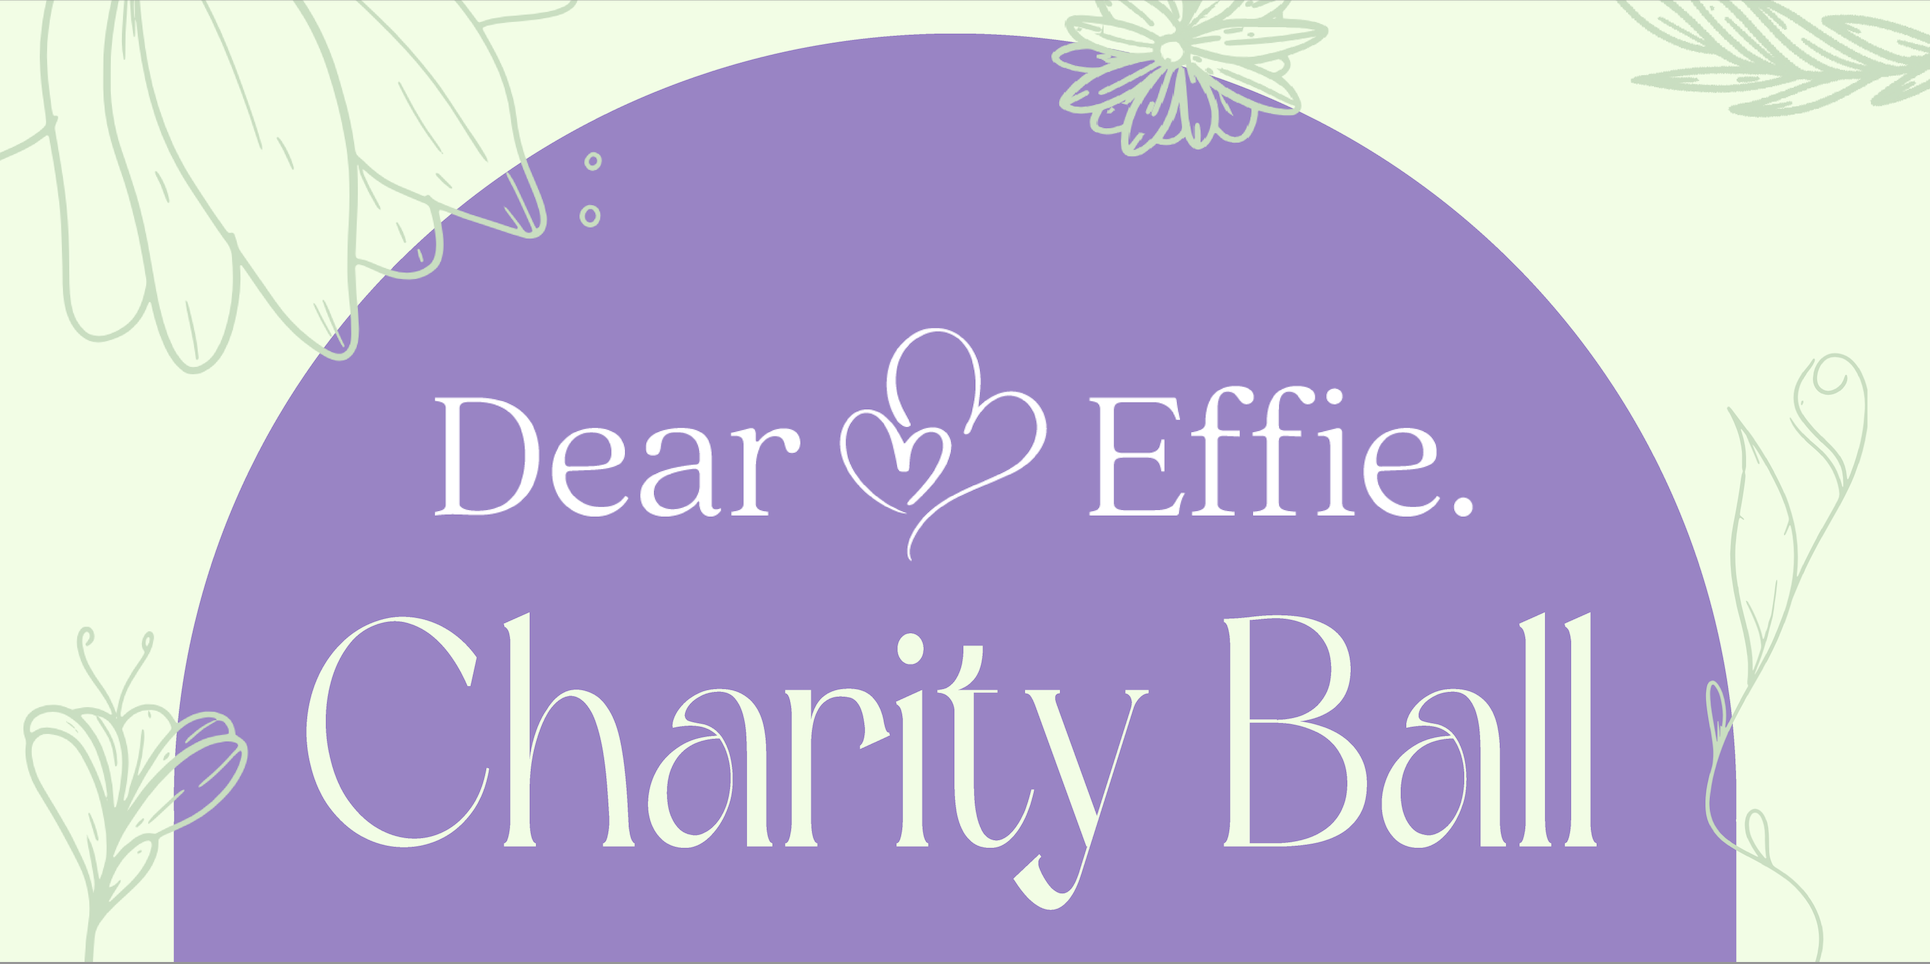 Dear Effie Charity Ball